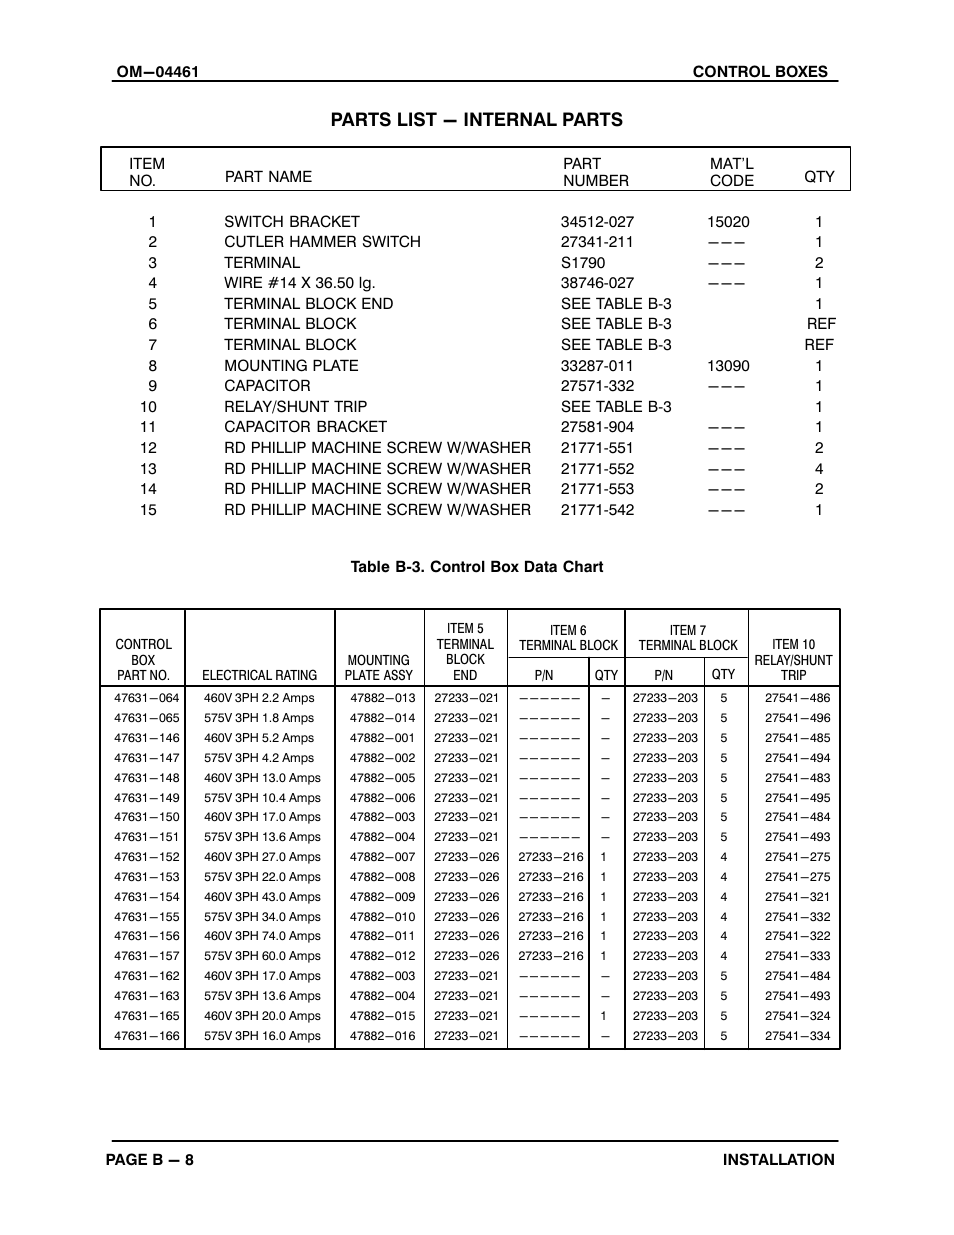 Parts list − internal parts | Gorman-Rupp Pumps SM4G1-X30 460/3 1002211 thru 1241783 User Manual | Page 13 / 18